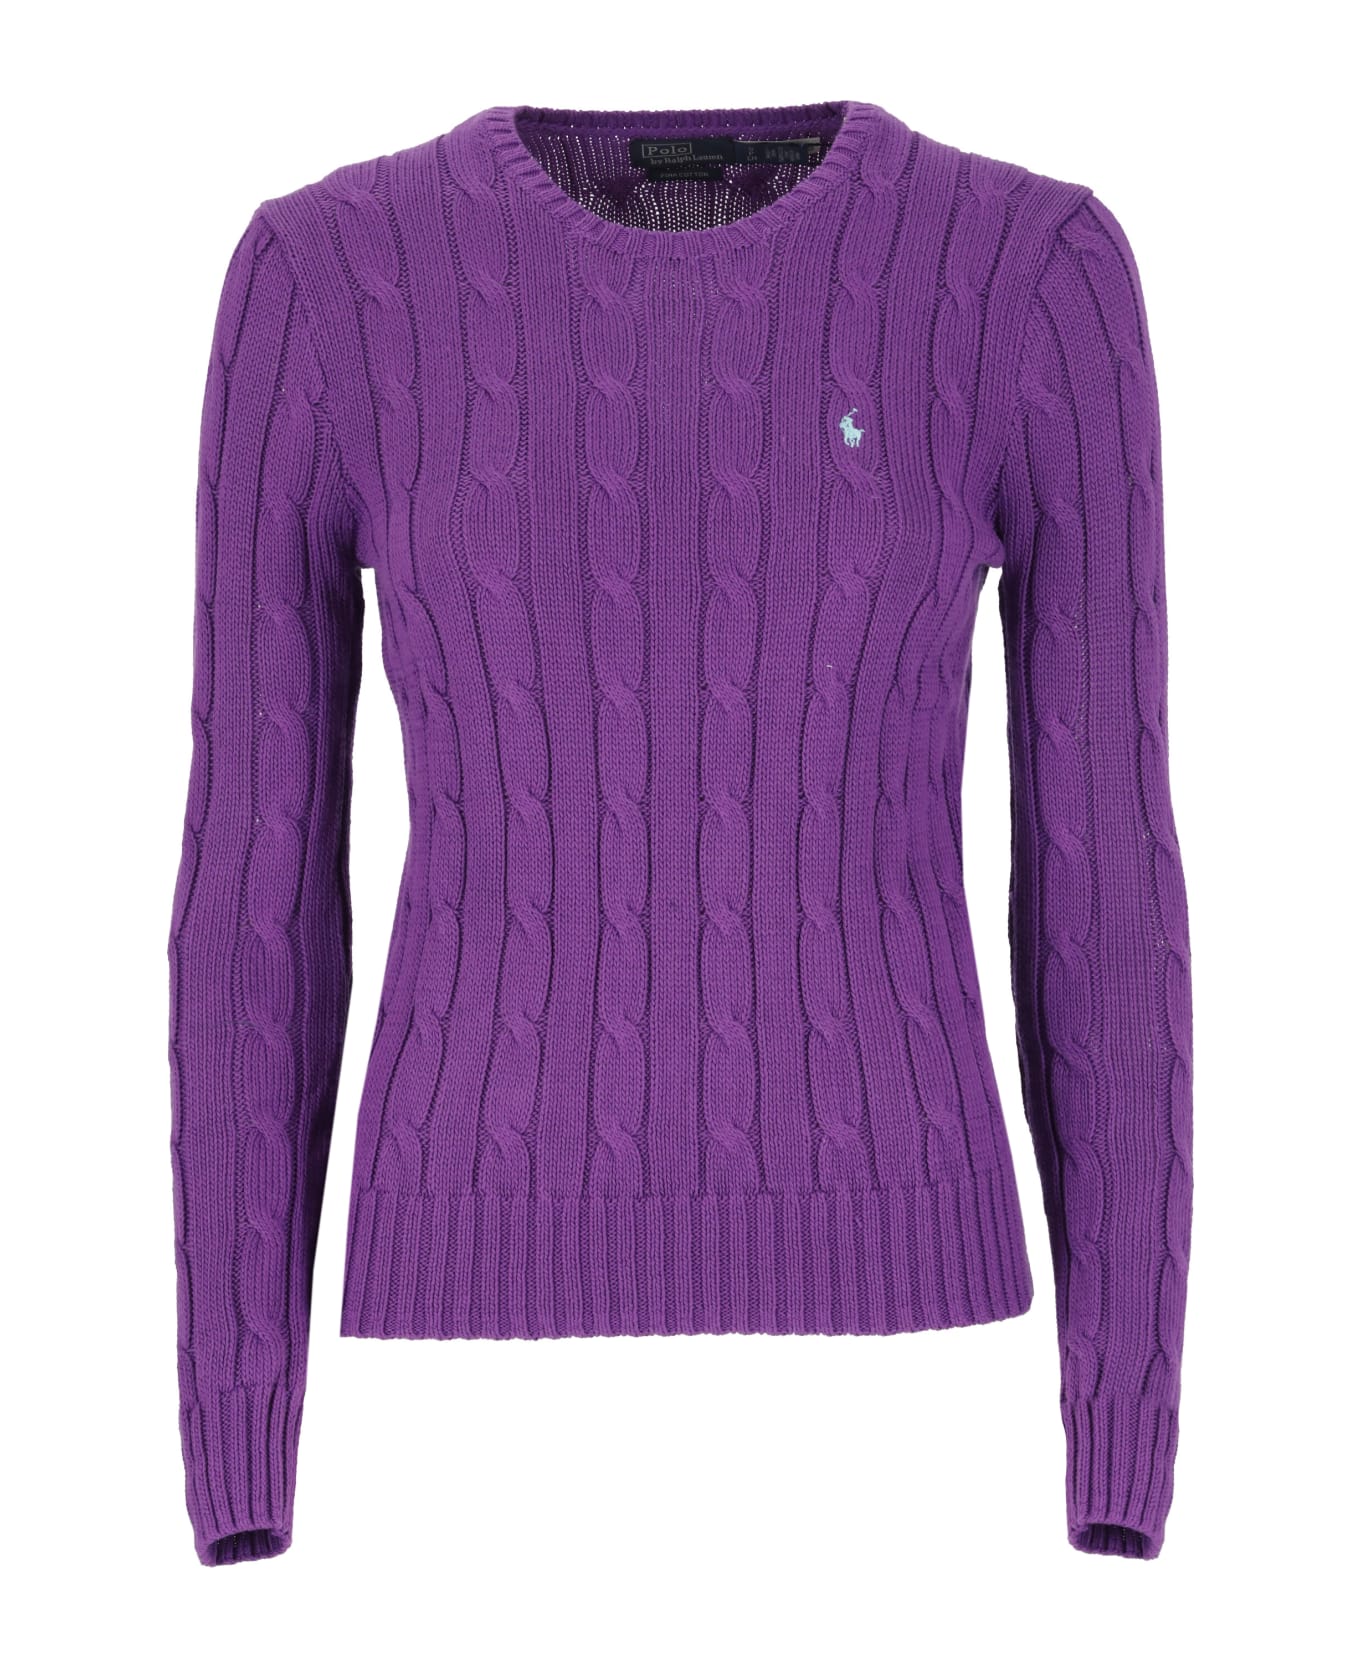 Ralph Lauren Sweater With Pony - Purple